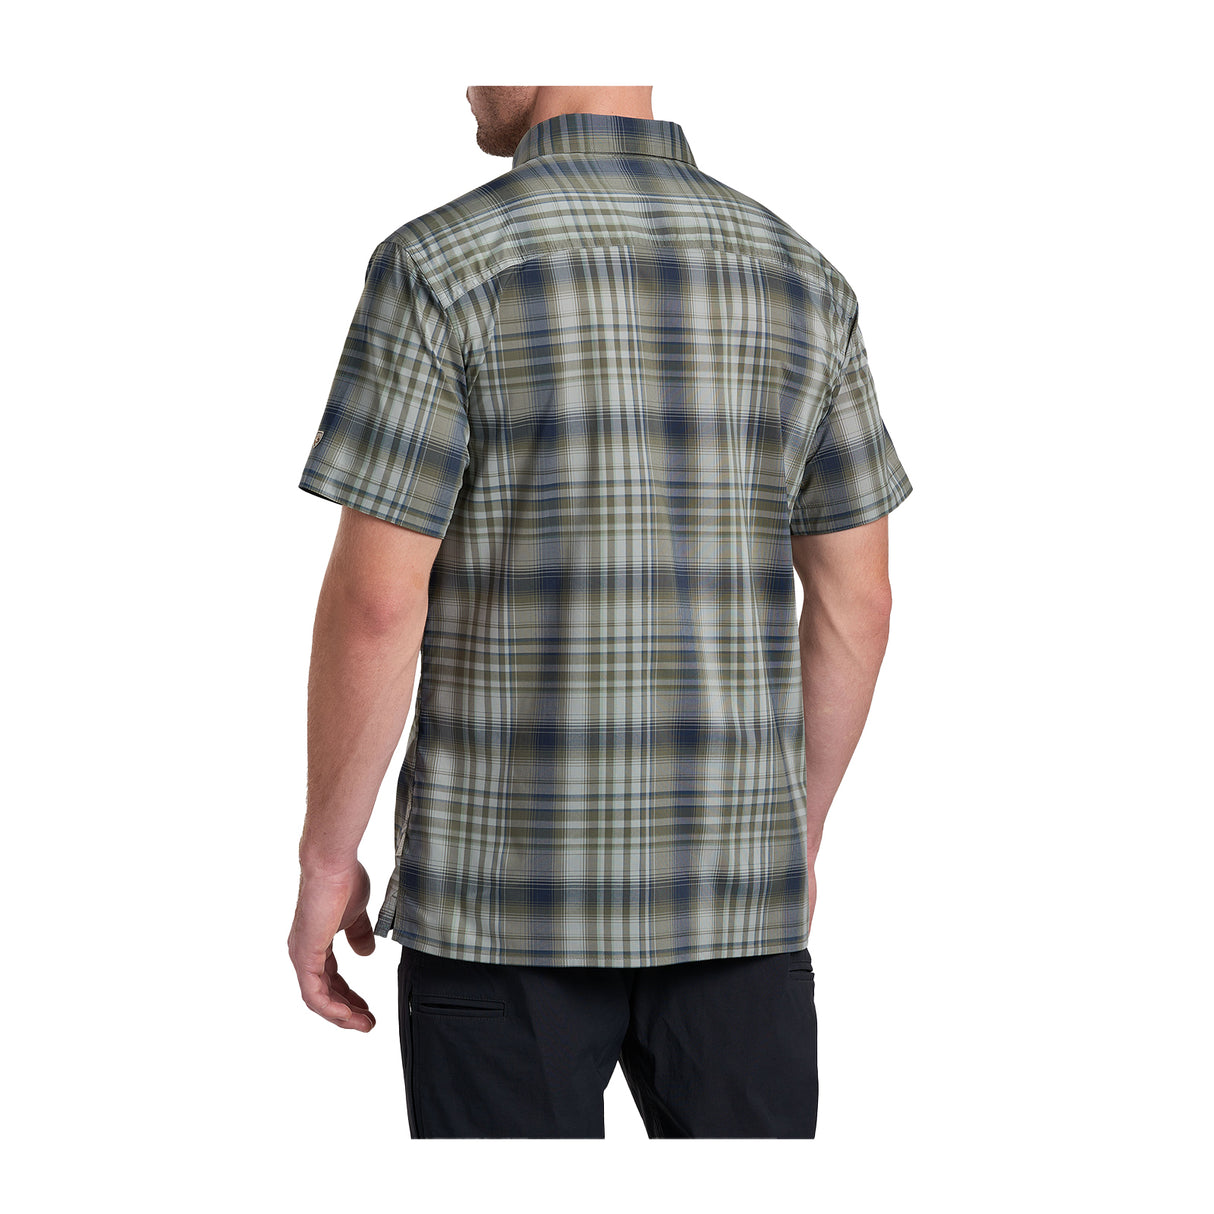 Kuhl Response Short Sleeve Shirt (Men) - Olive Night